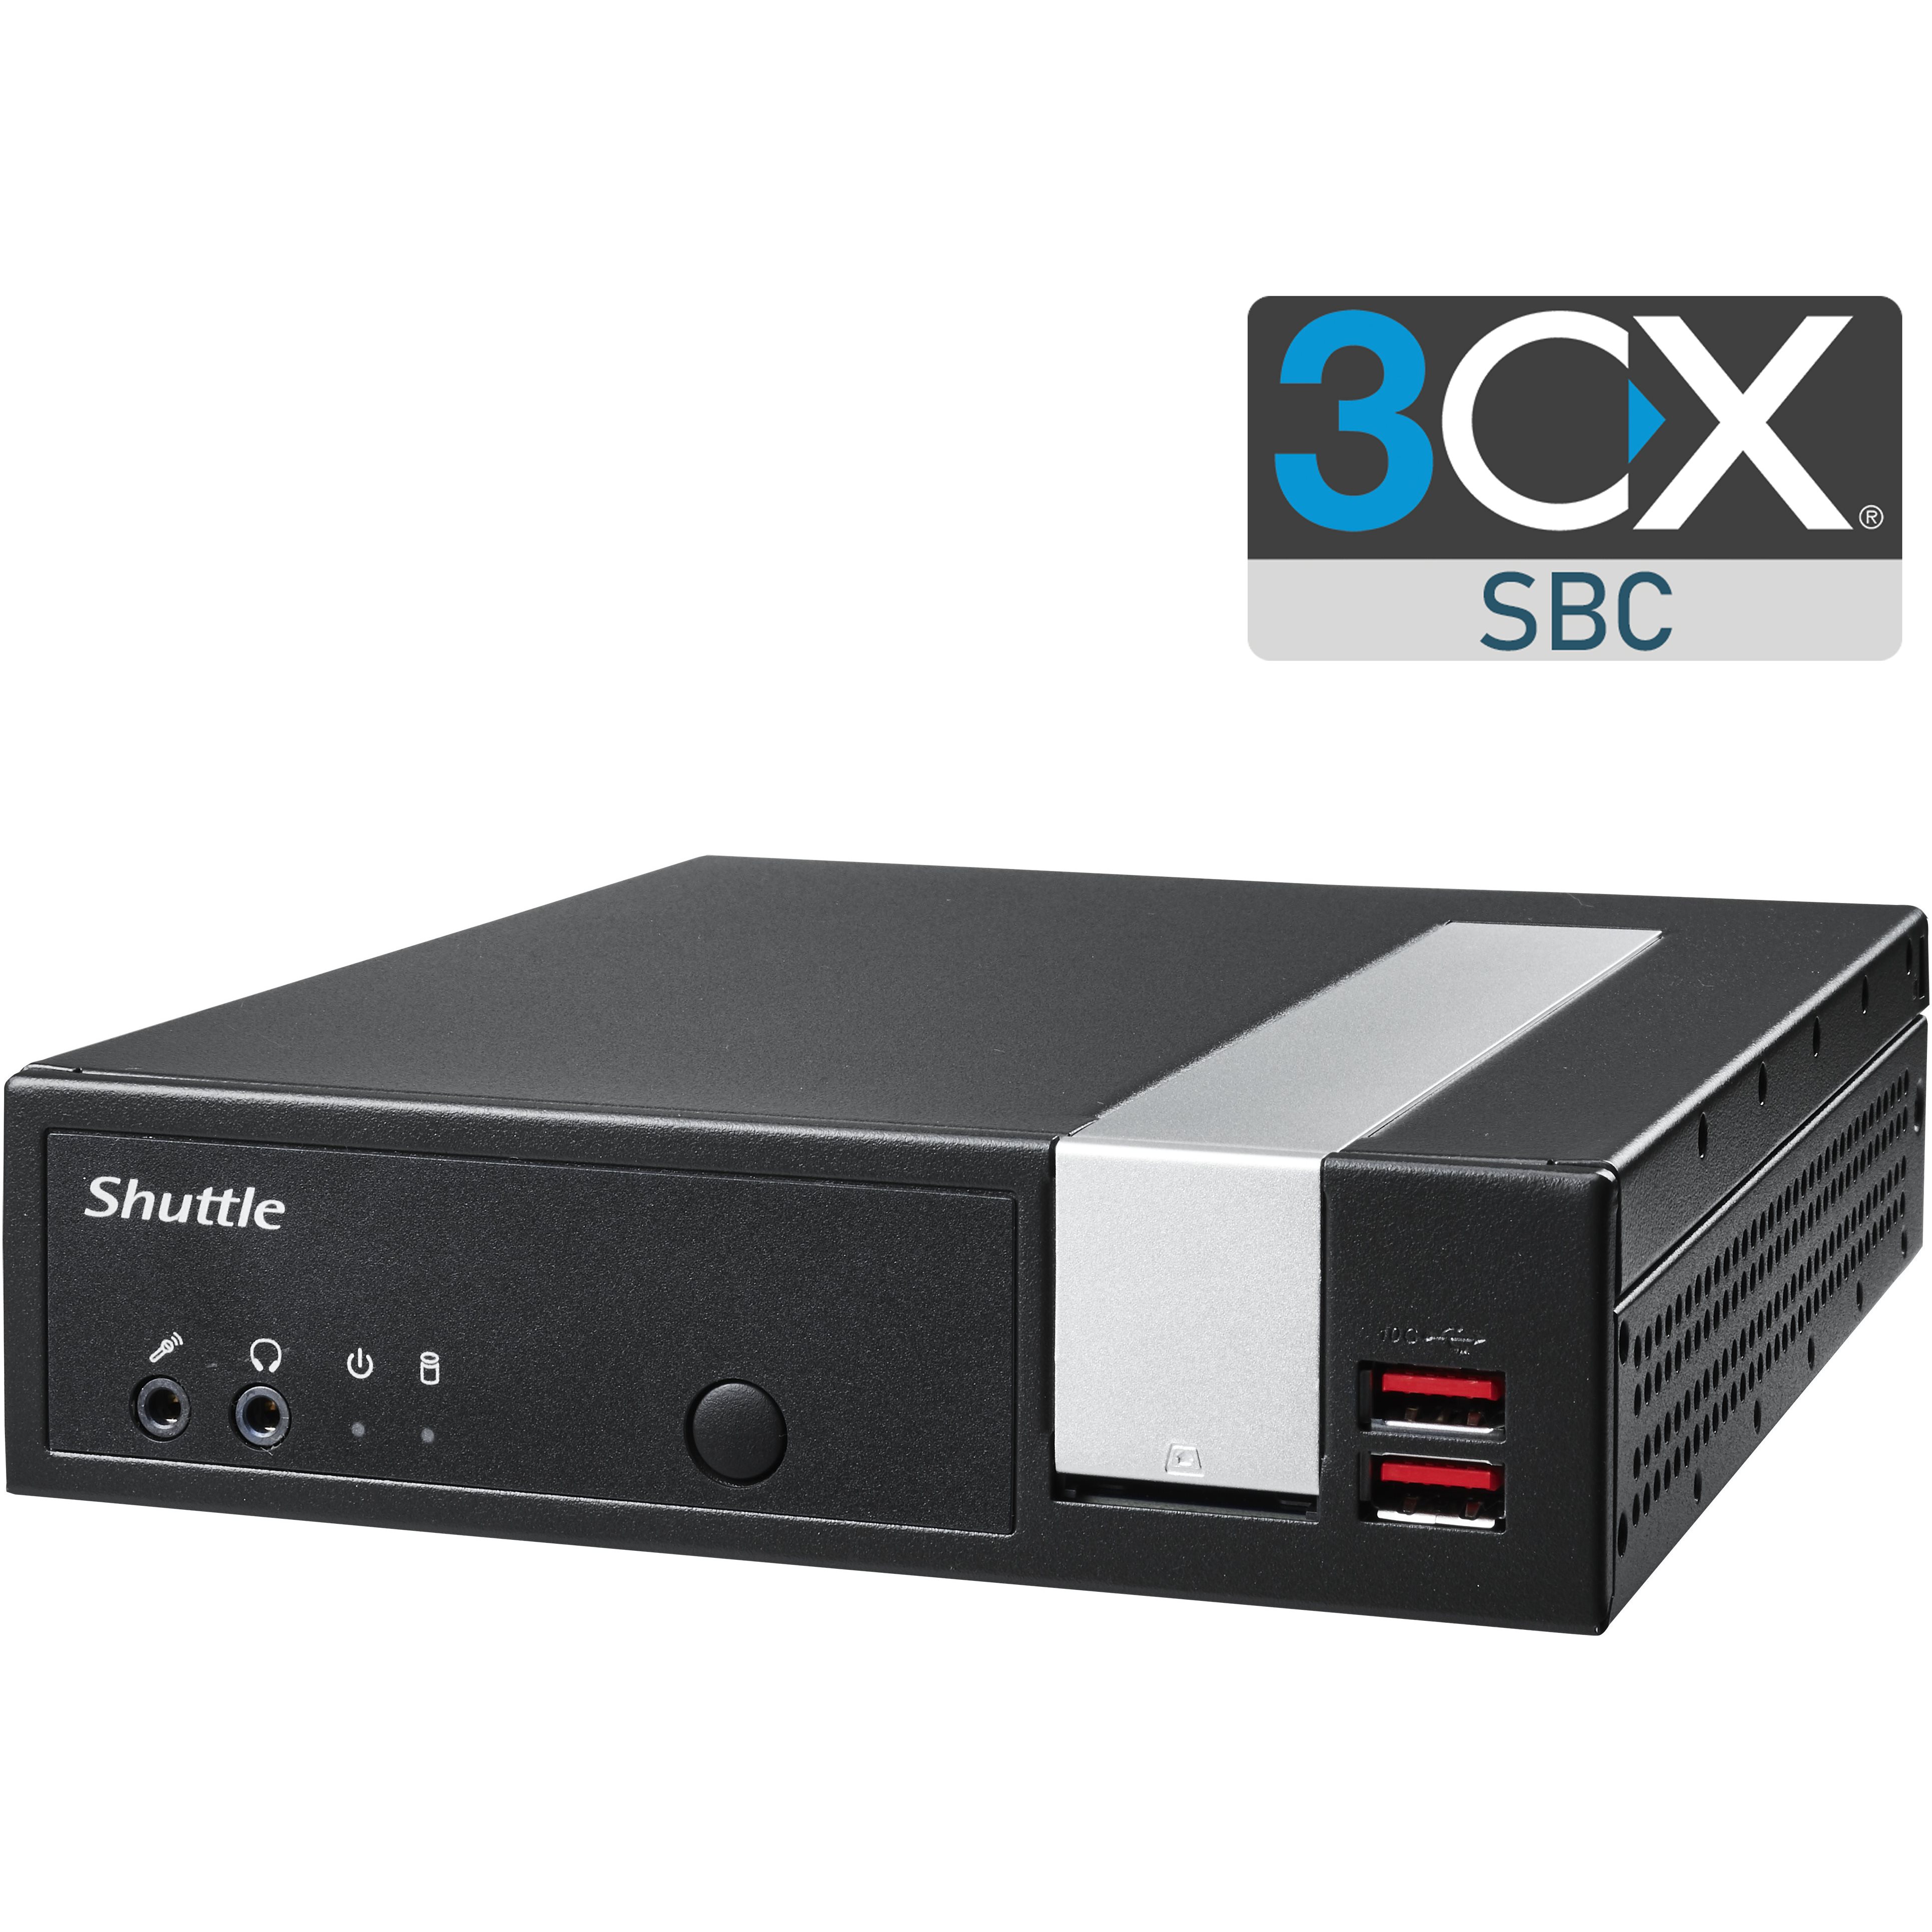   Serveur IPBX   SBC 3CX Desktop pr-install jusqu' 30 devices CX-SERV-SBCV4